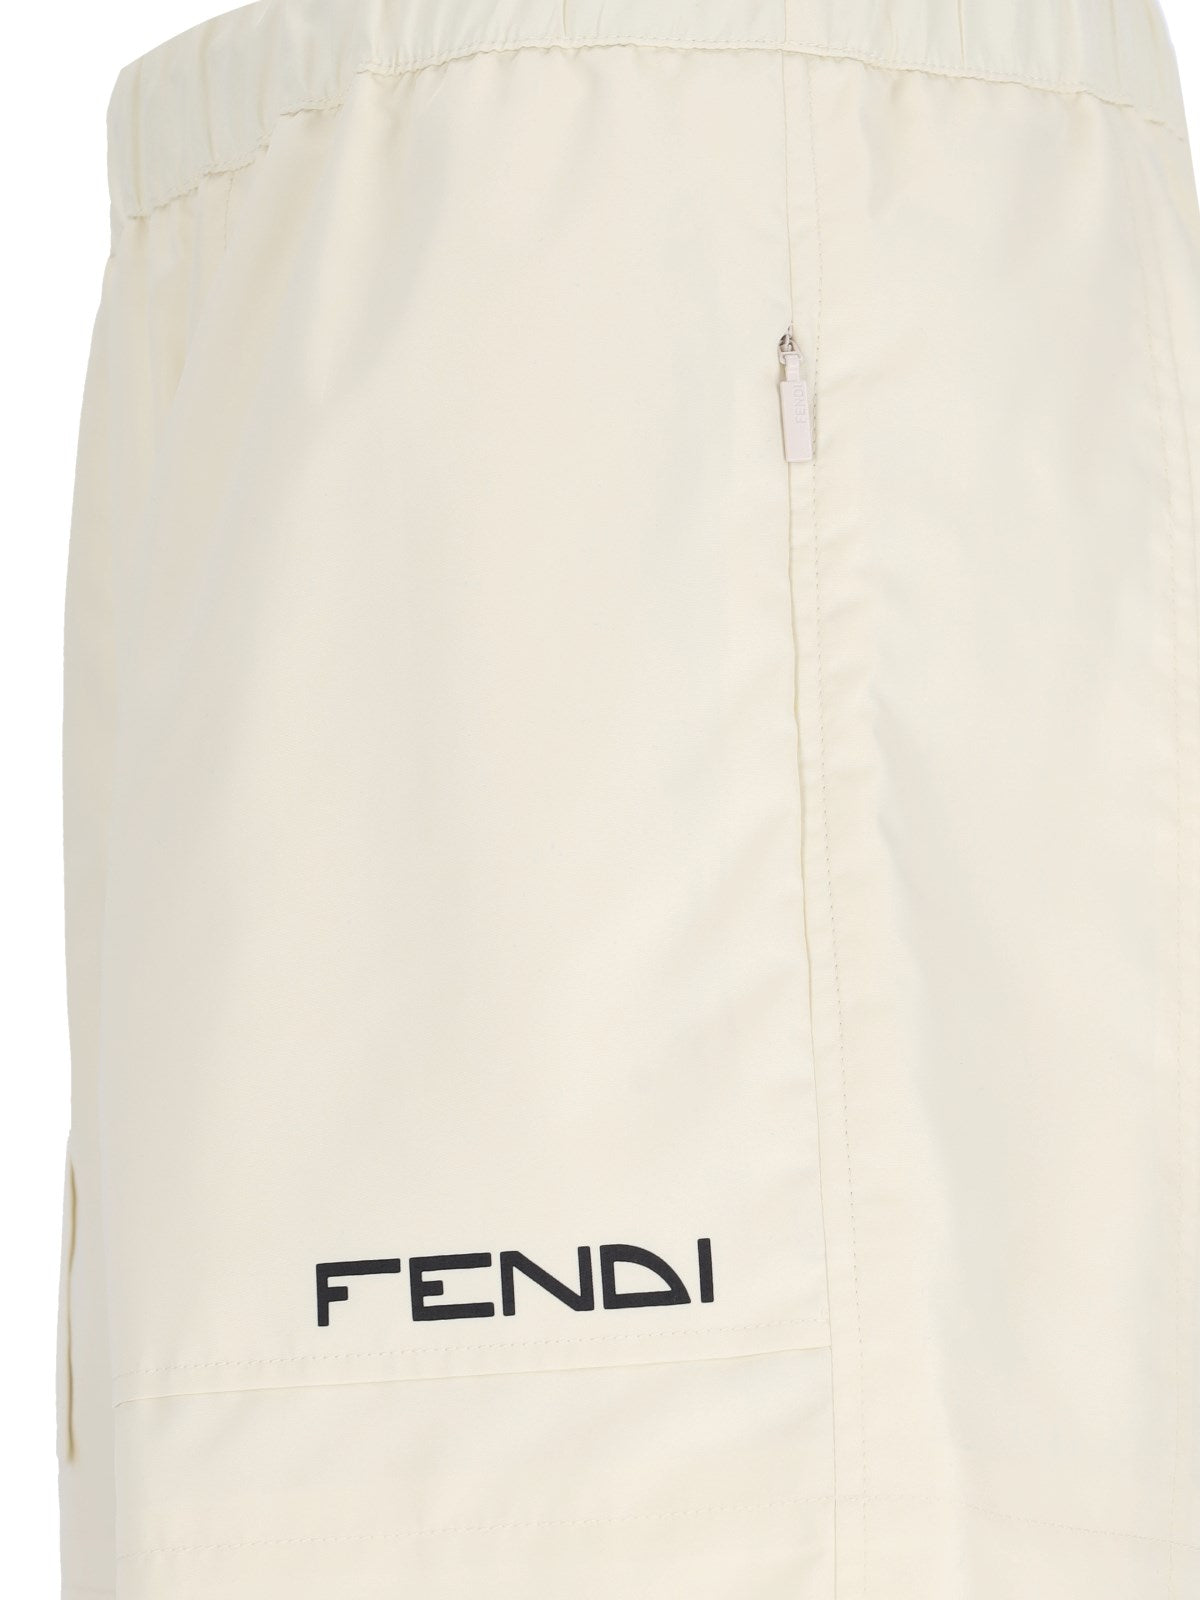 Fendi Pantaloncini Sportivi logo-Short-Fendi-Pantaloncini sportivi logo Fendi, in tessuto panna, vita elastica, coulisse, due tasche zip laterali, stampa logo nero fronte, gamba dritta.-Dresso